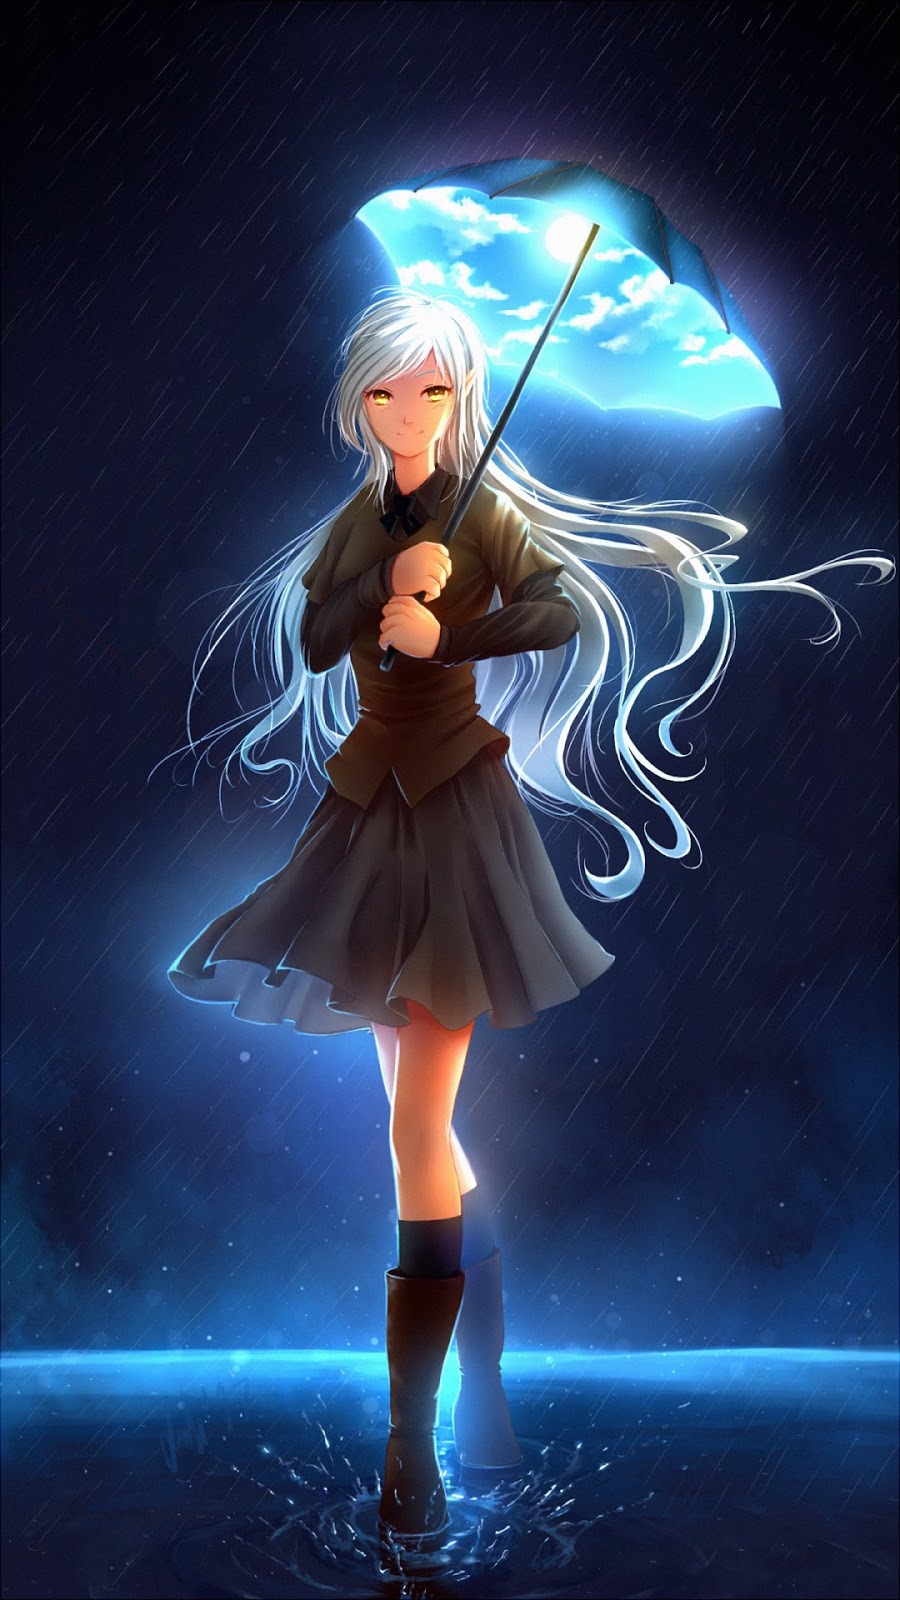 Anime girl with magical umbrella mobile wallpaper Mobile Walls